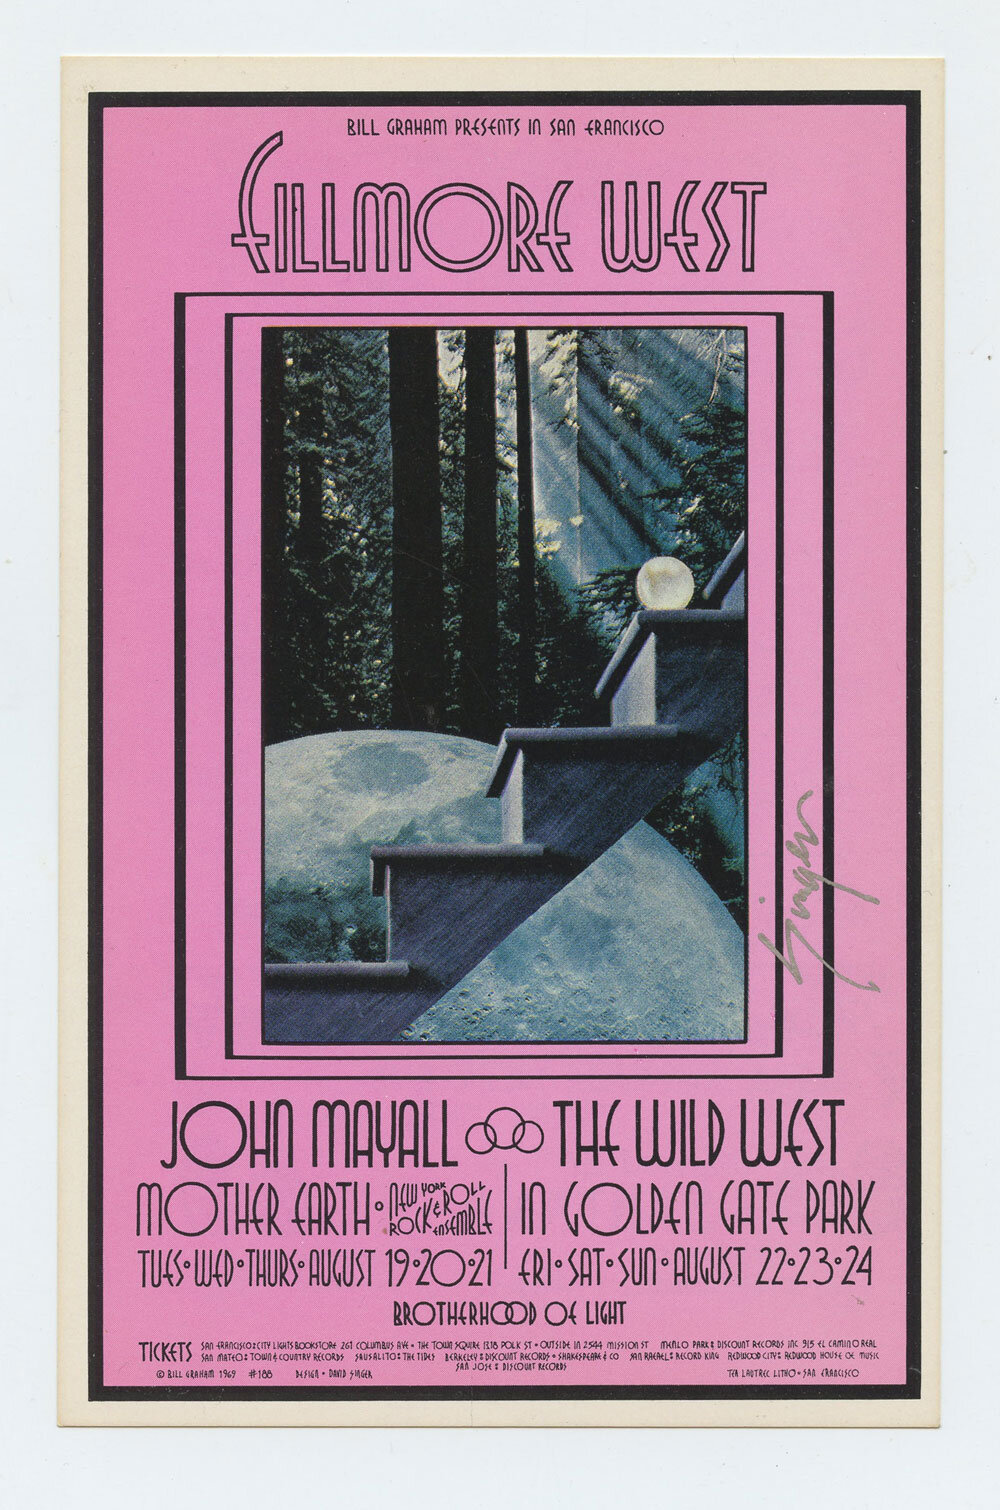 BG 188 Postcard Ad Back John Mayall 1969 Aug 19 David Singer signed